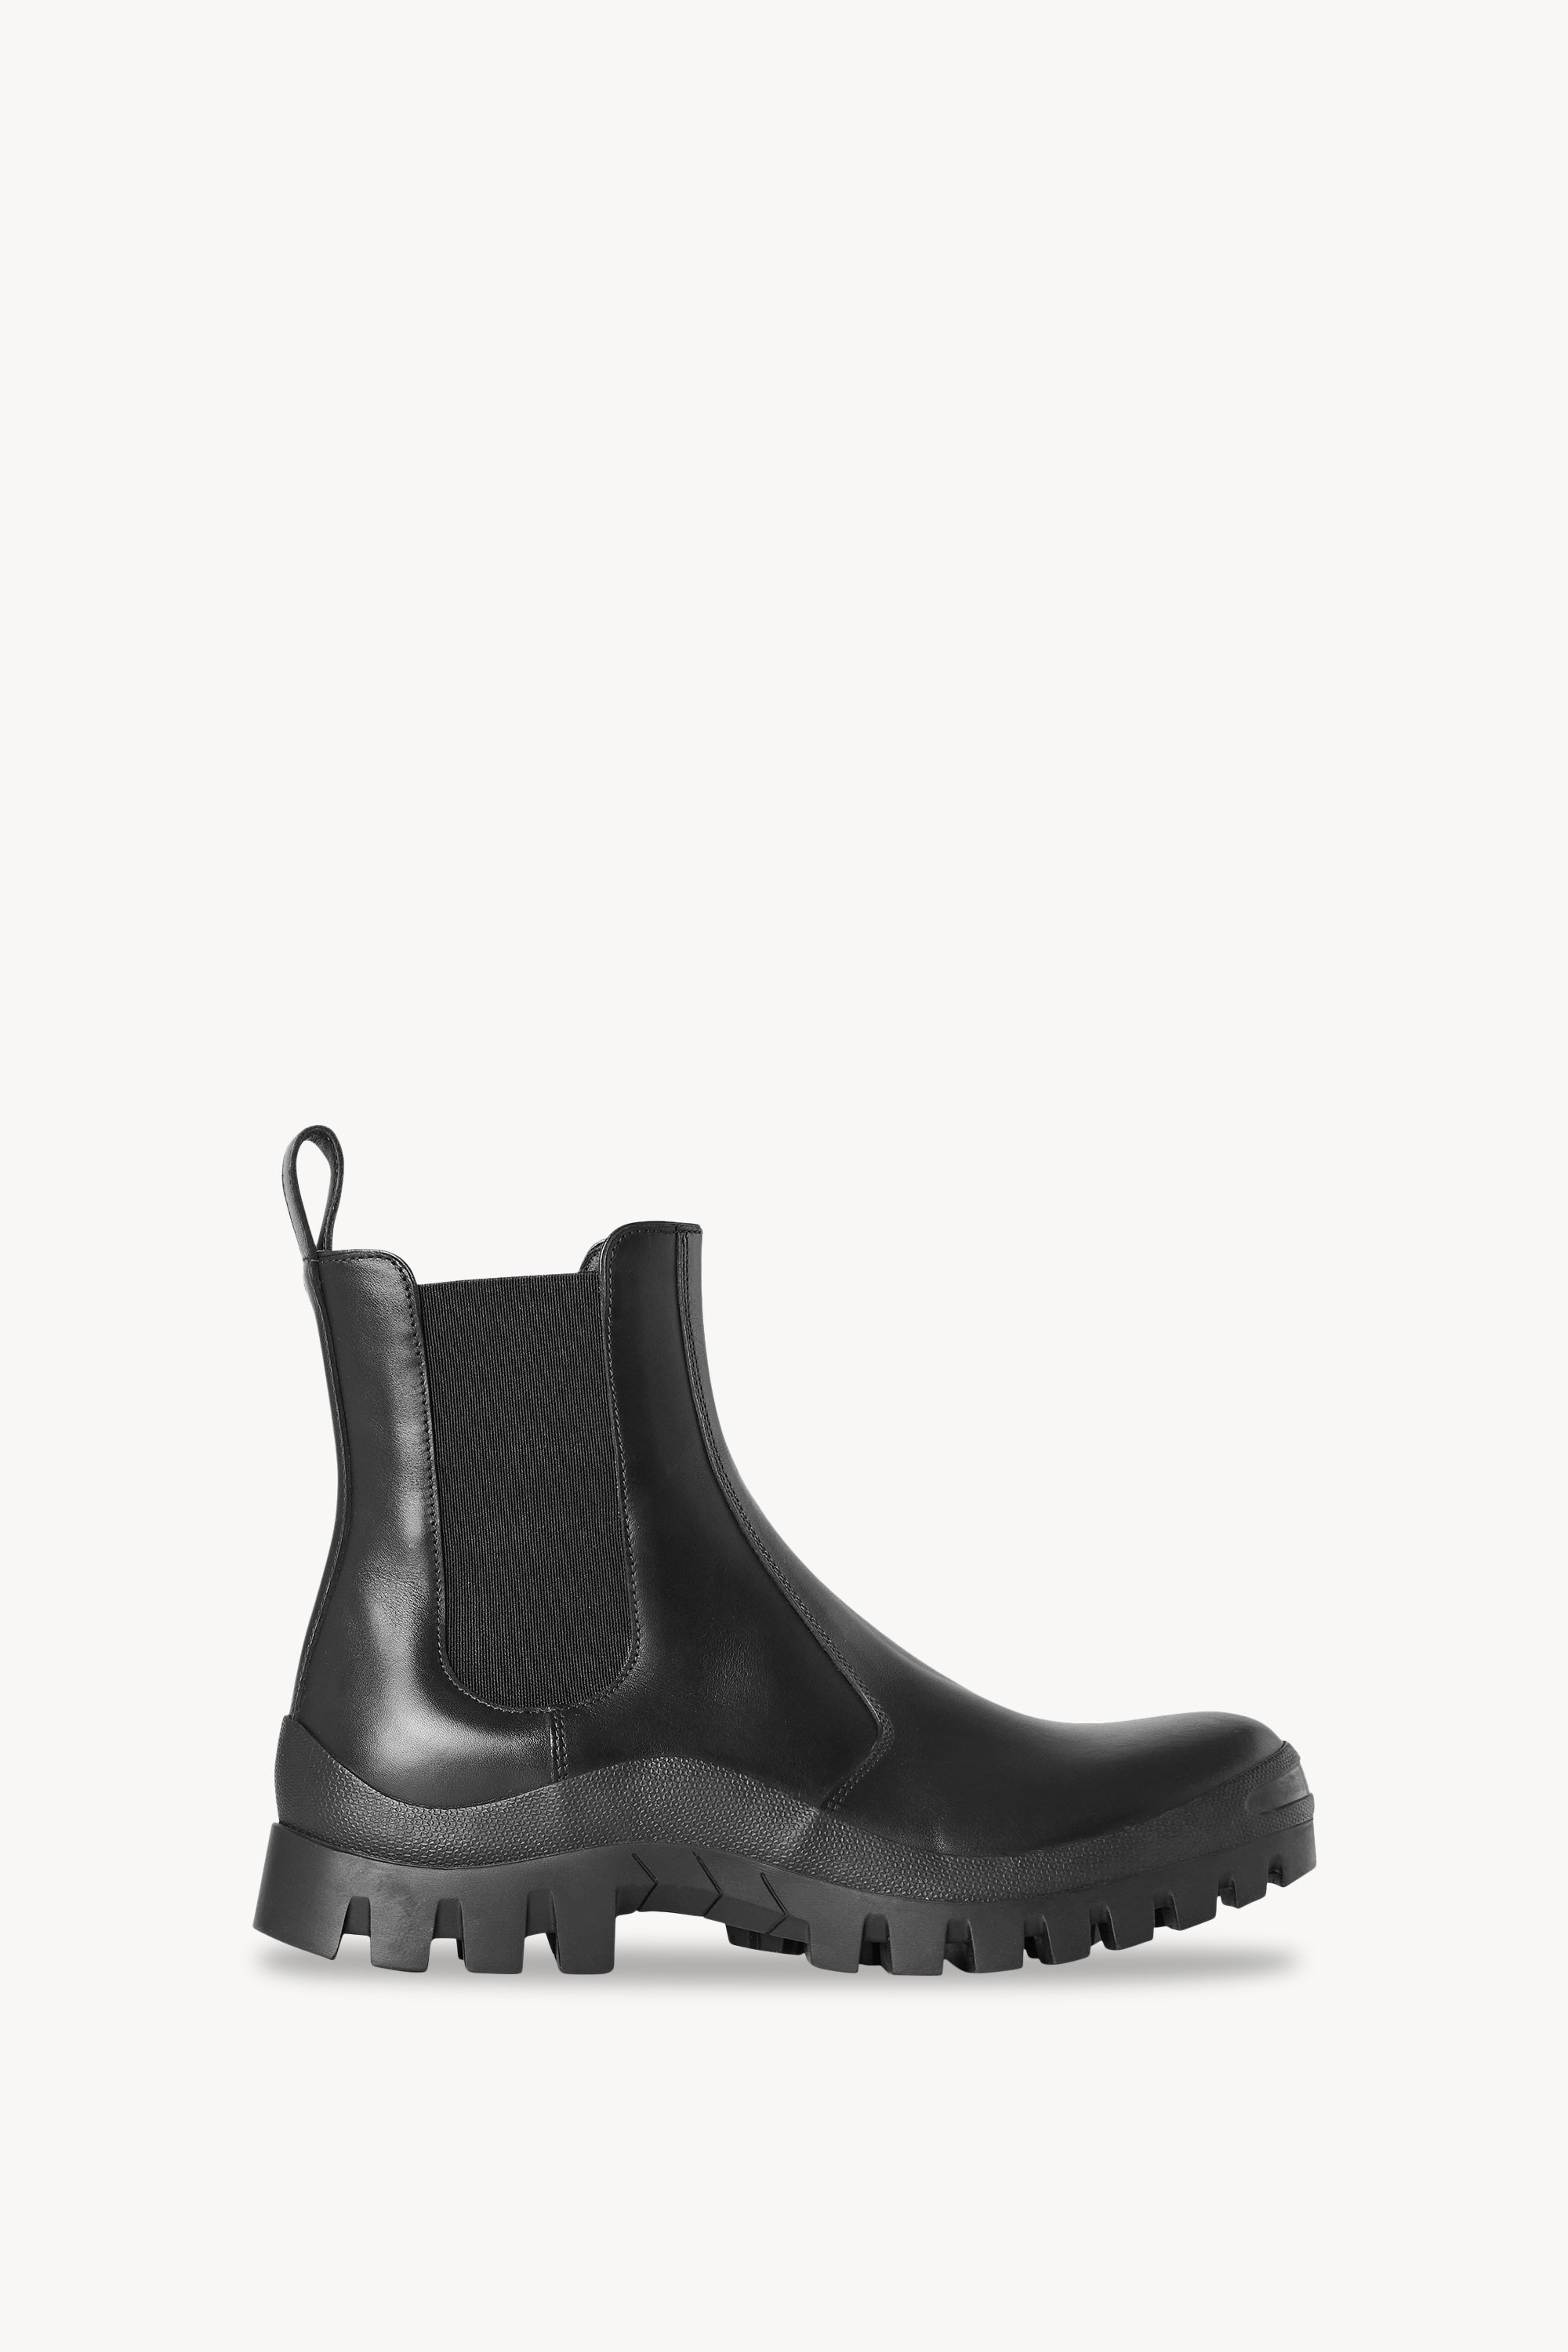 Greta Winter Boot Black in Leather – The Row